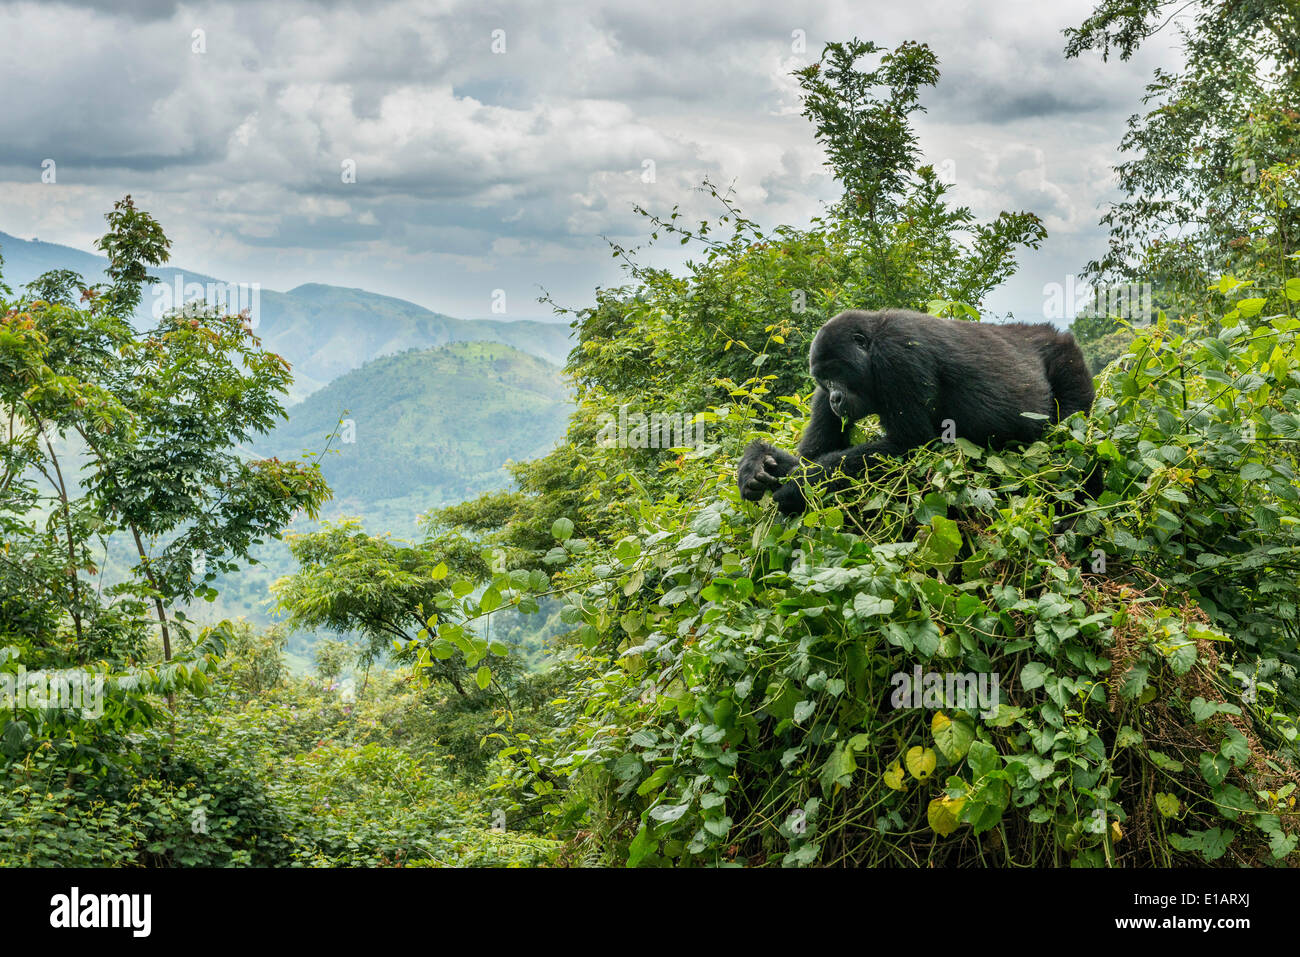 Mountain Gorilla (Gorilla beringei beringei) in the habitat, Bwindi Impenetrable National Park, Uganda Stock Photo